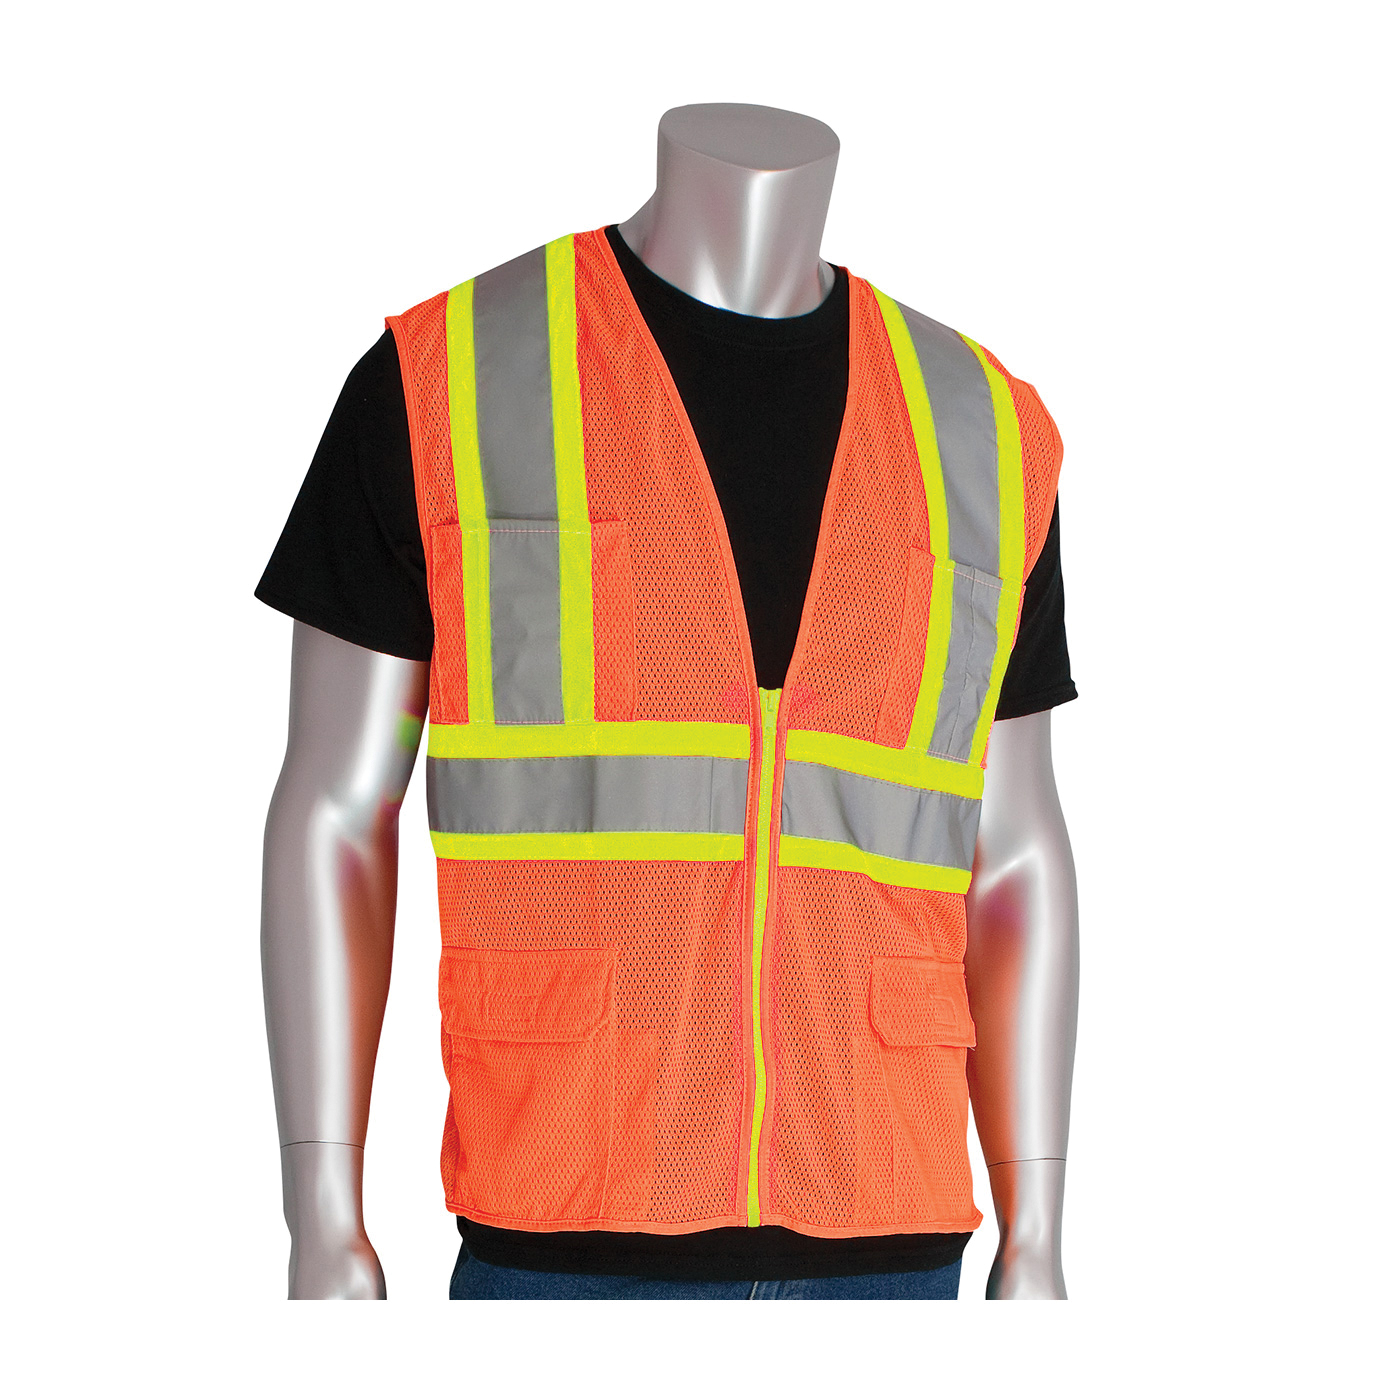 PIP® 302-MAPMOR-4X 2-Tone Premium Surveyor Safety Vest, 4XL, Hi-Viz Orange, Polyester, Zipper Closure, 11 Pockets, ANSI Class: Class 2, Specifications Met: ANSI 107 Type R